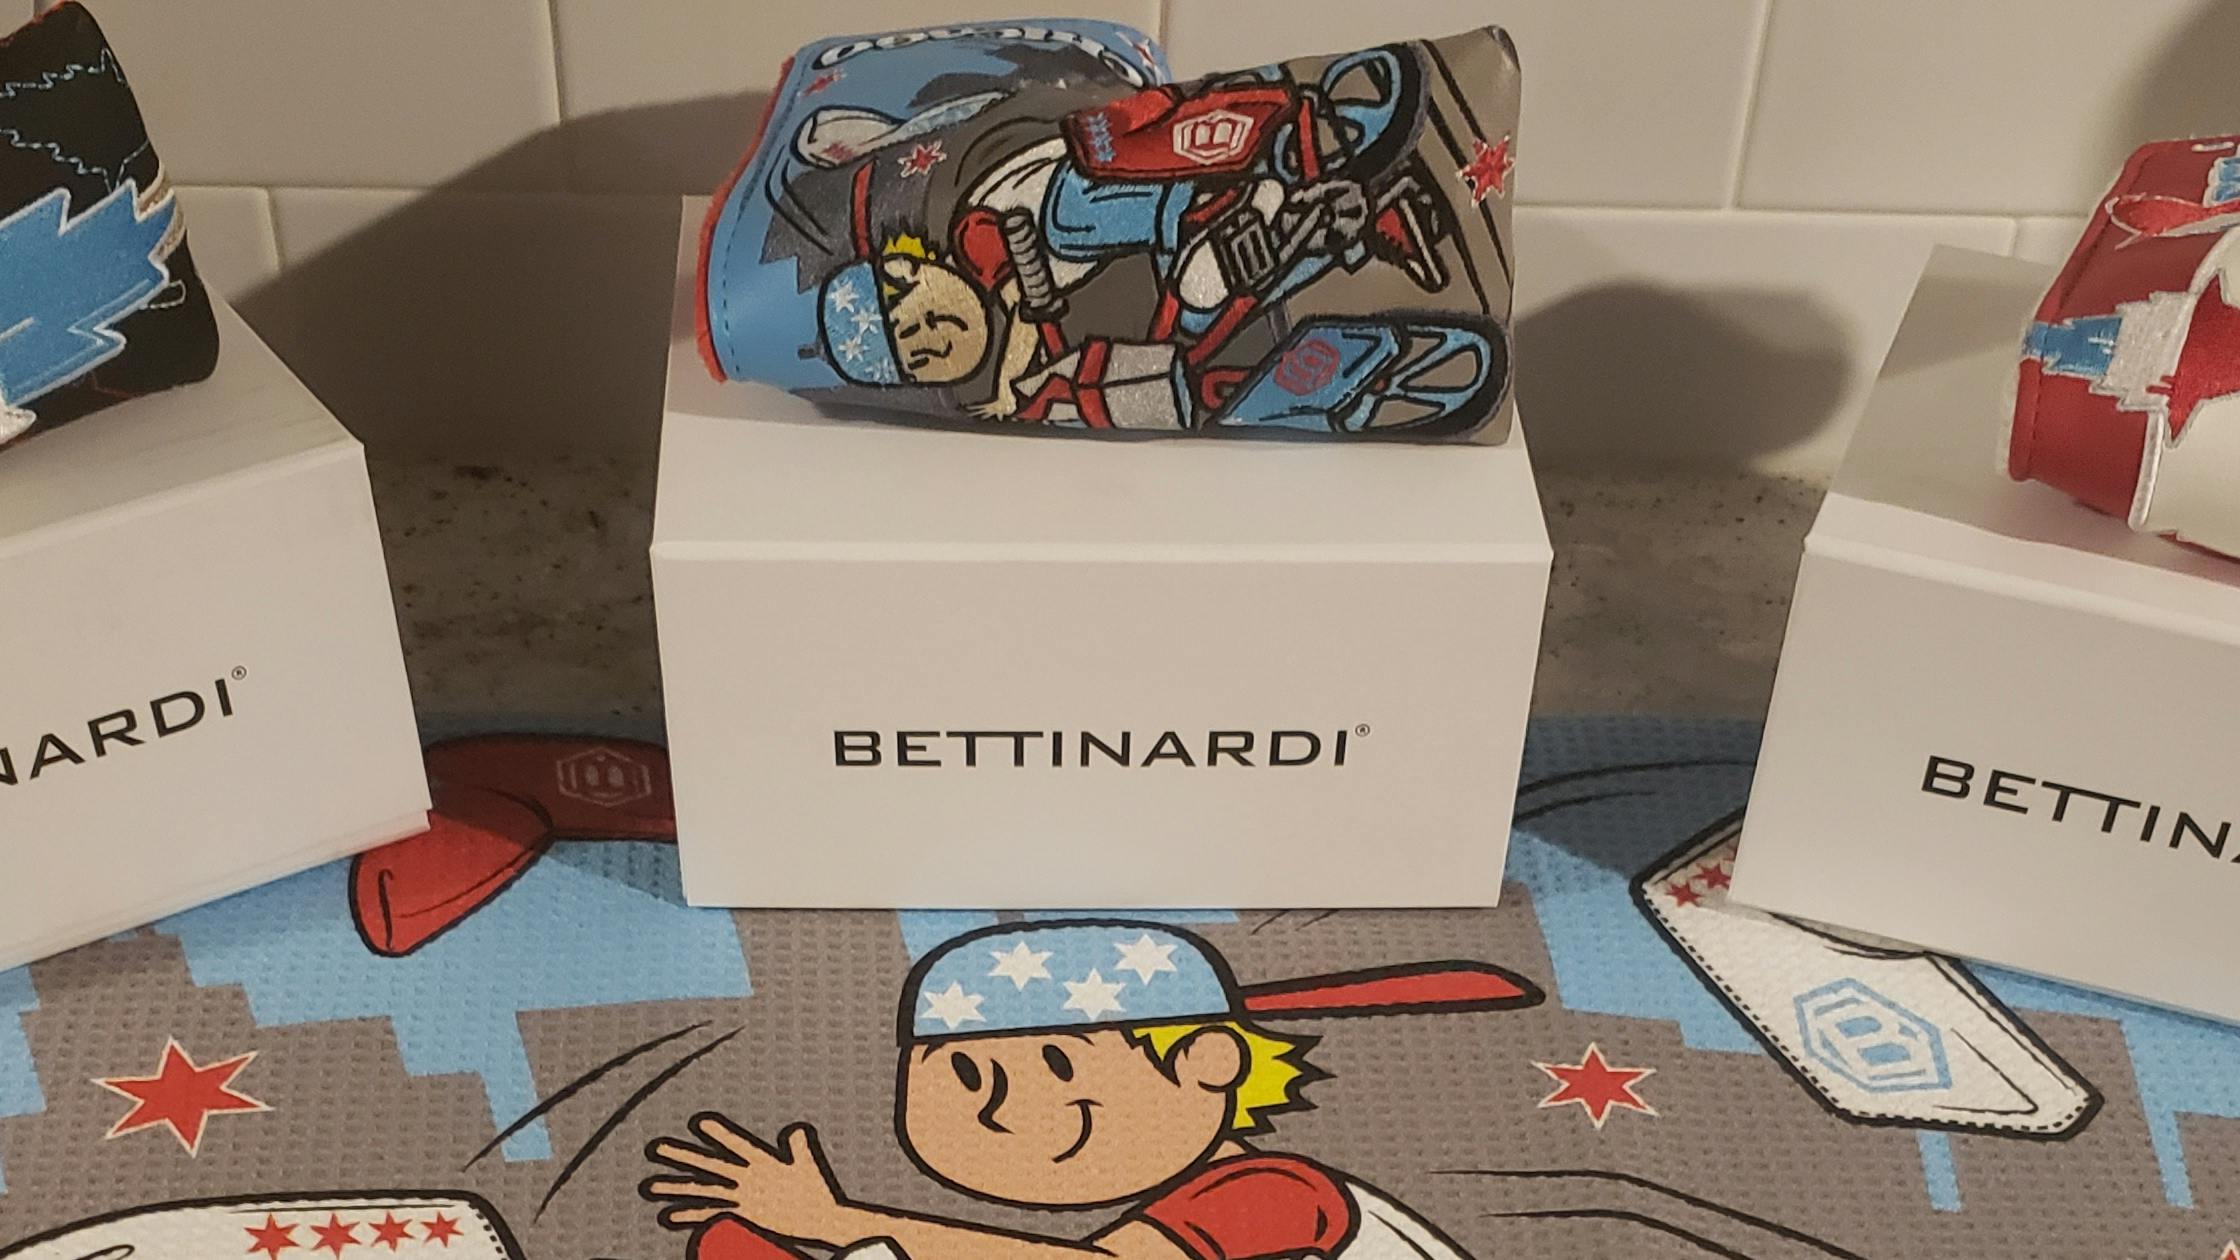 A display of Bettinardi merchandise